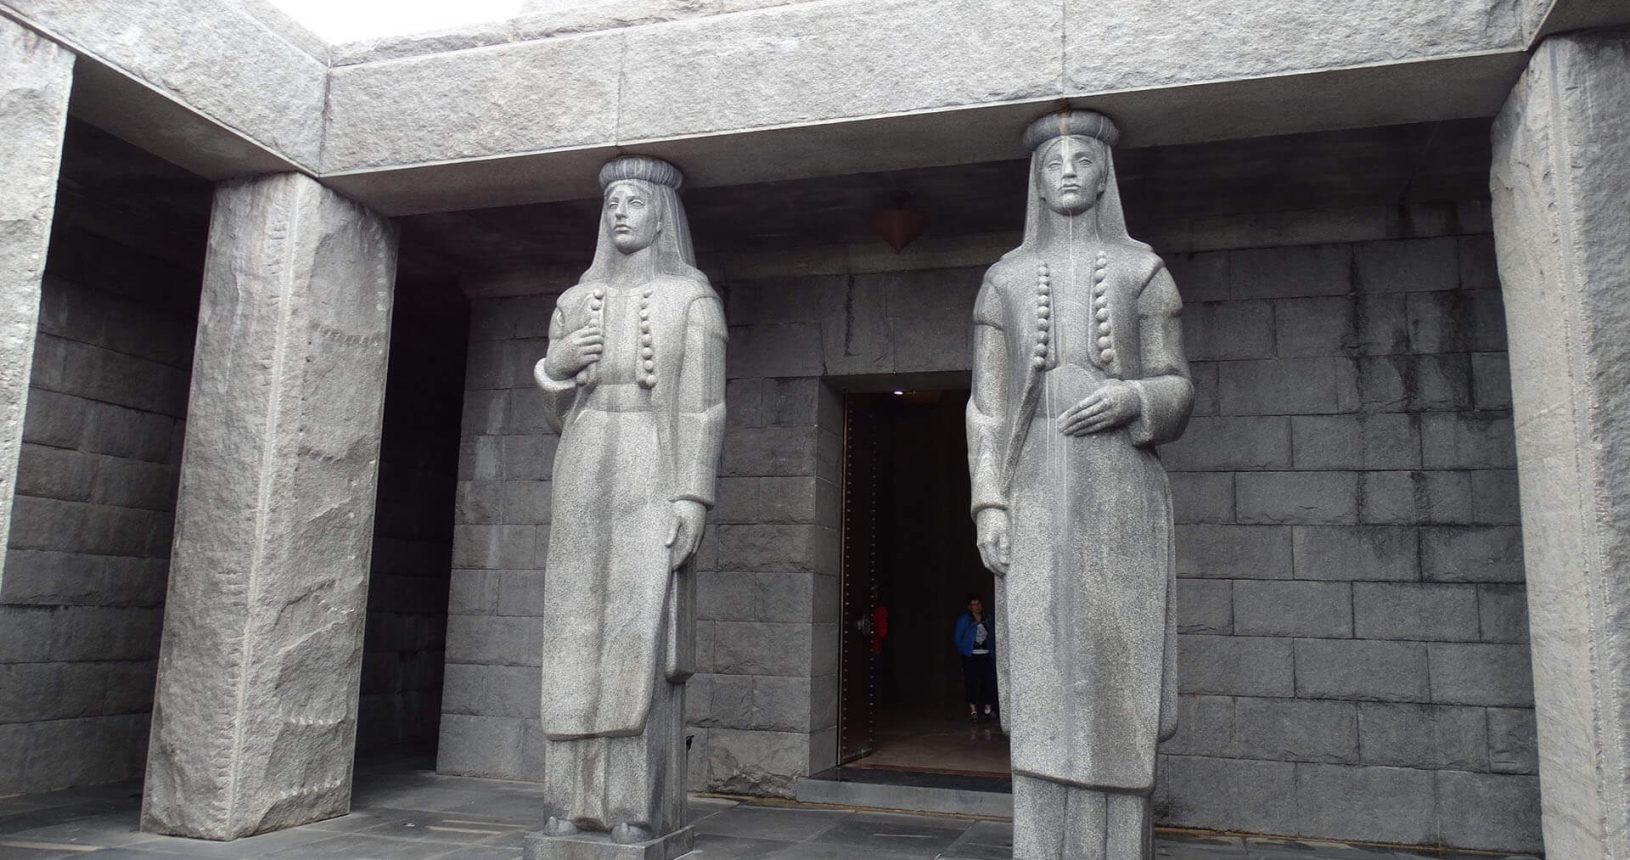 Njegos Mausoleum sculptures